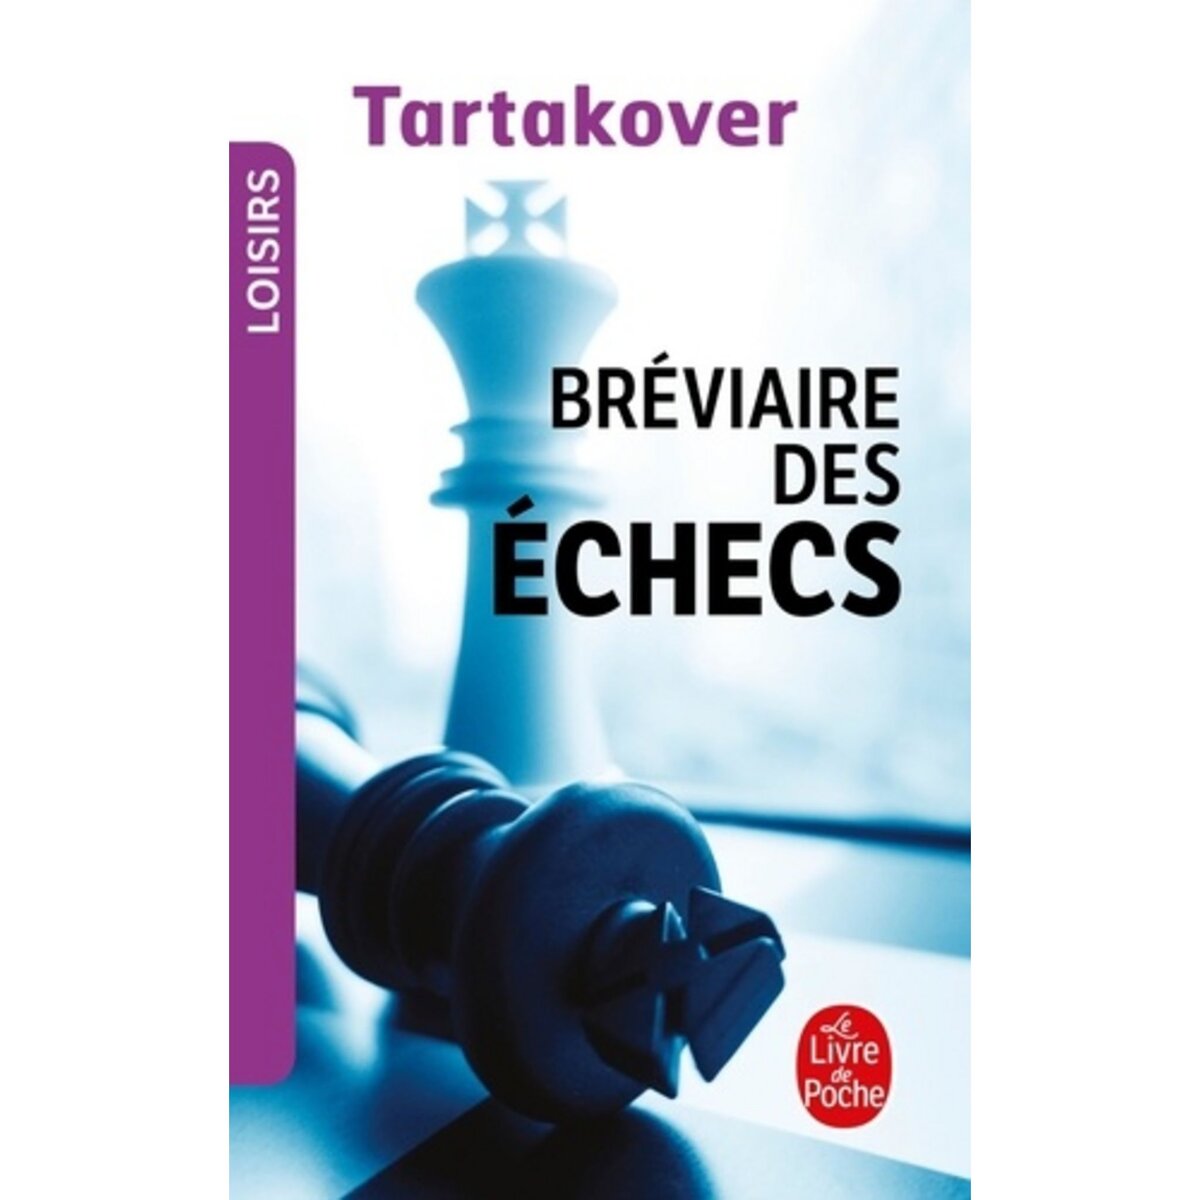  BREVIAIRE DES ECHECS, Tartakover Xavier